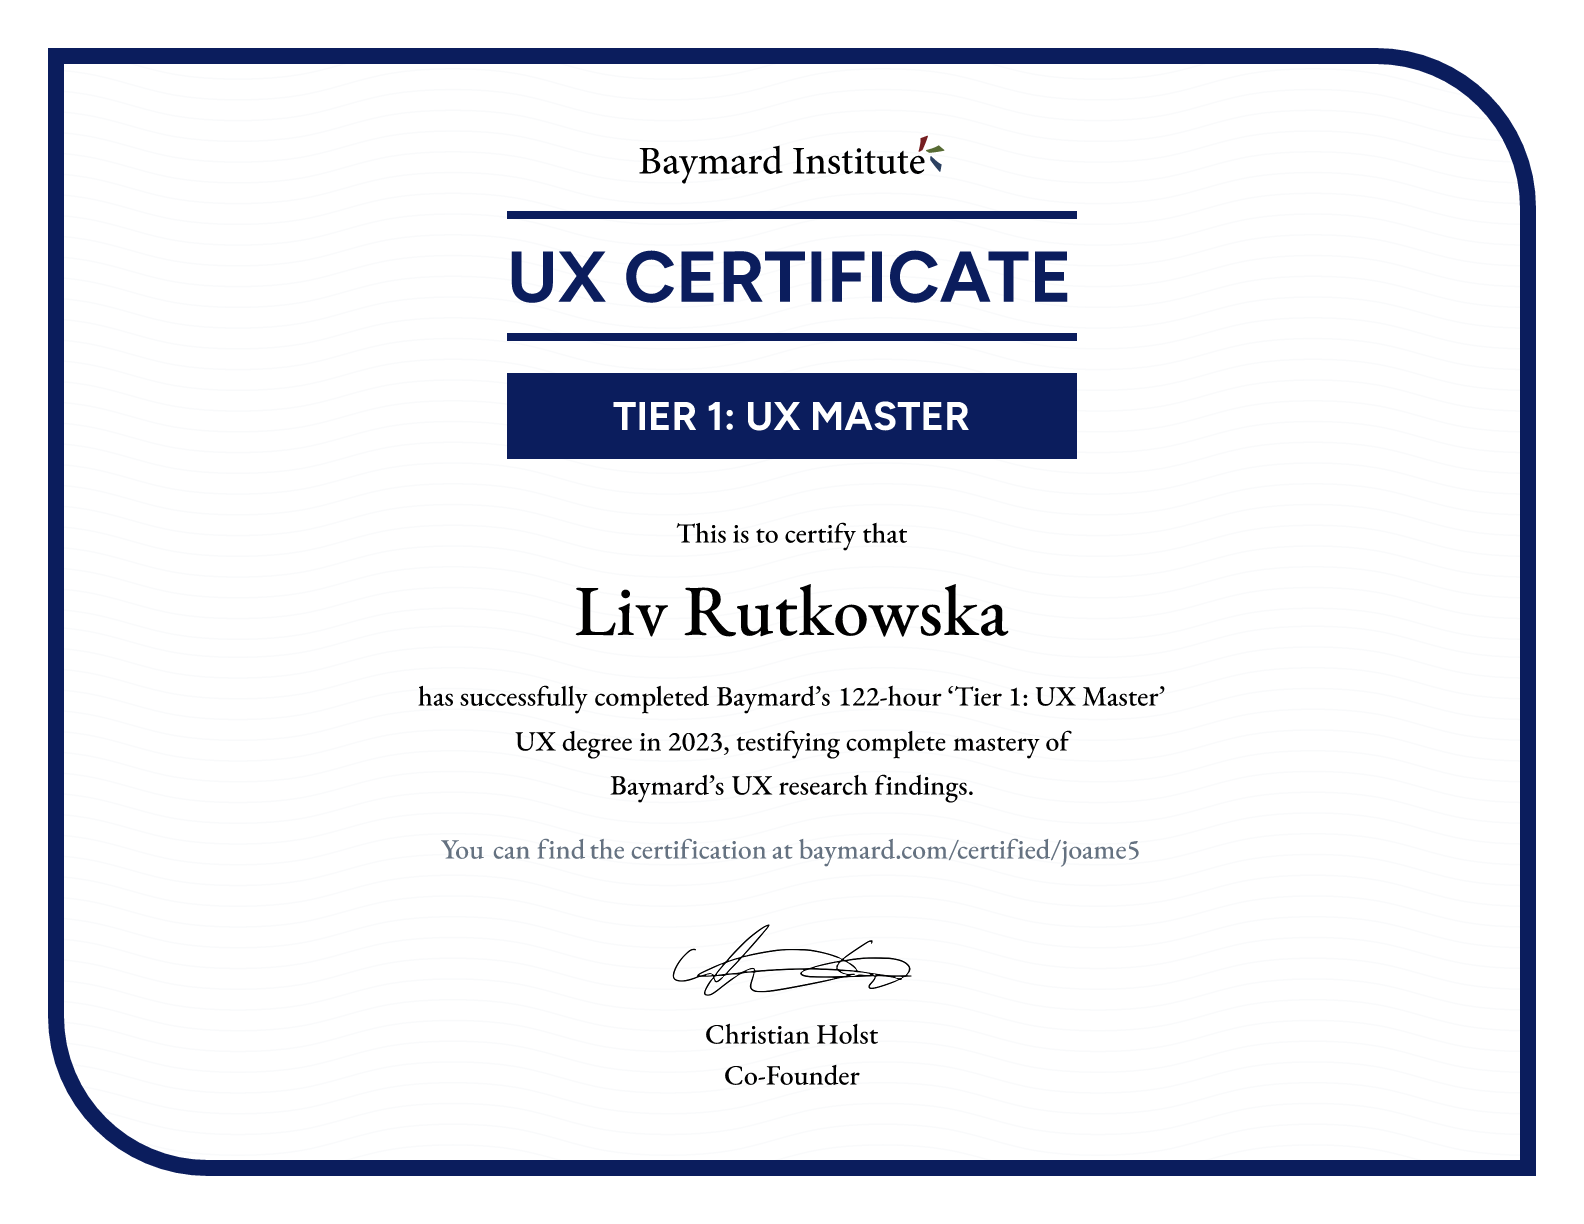 Liv Rutkowska’s certificate